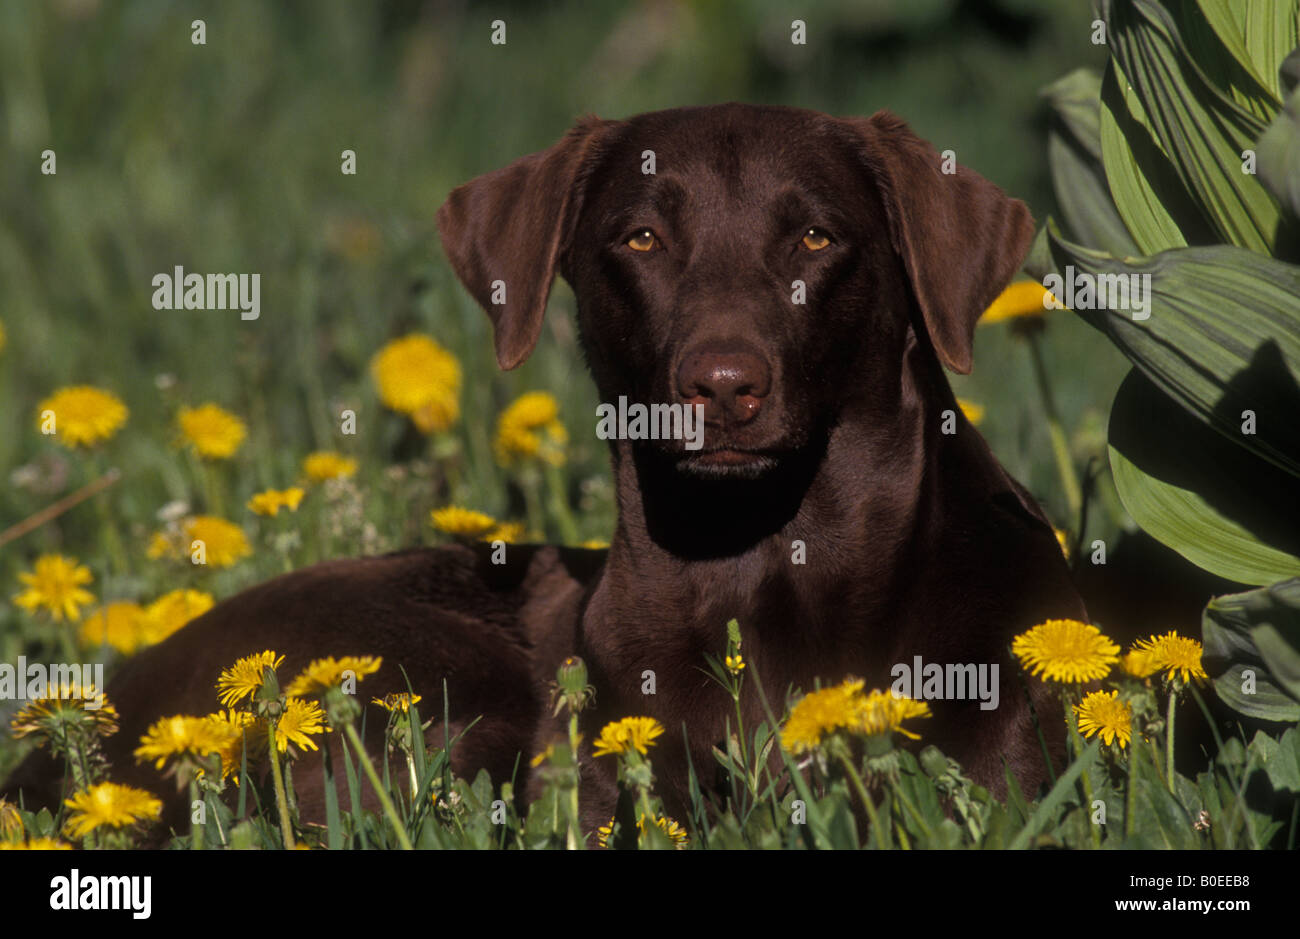 Chocolate Labrador Retriever - Colorado - In field with dandelions Stock Photo